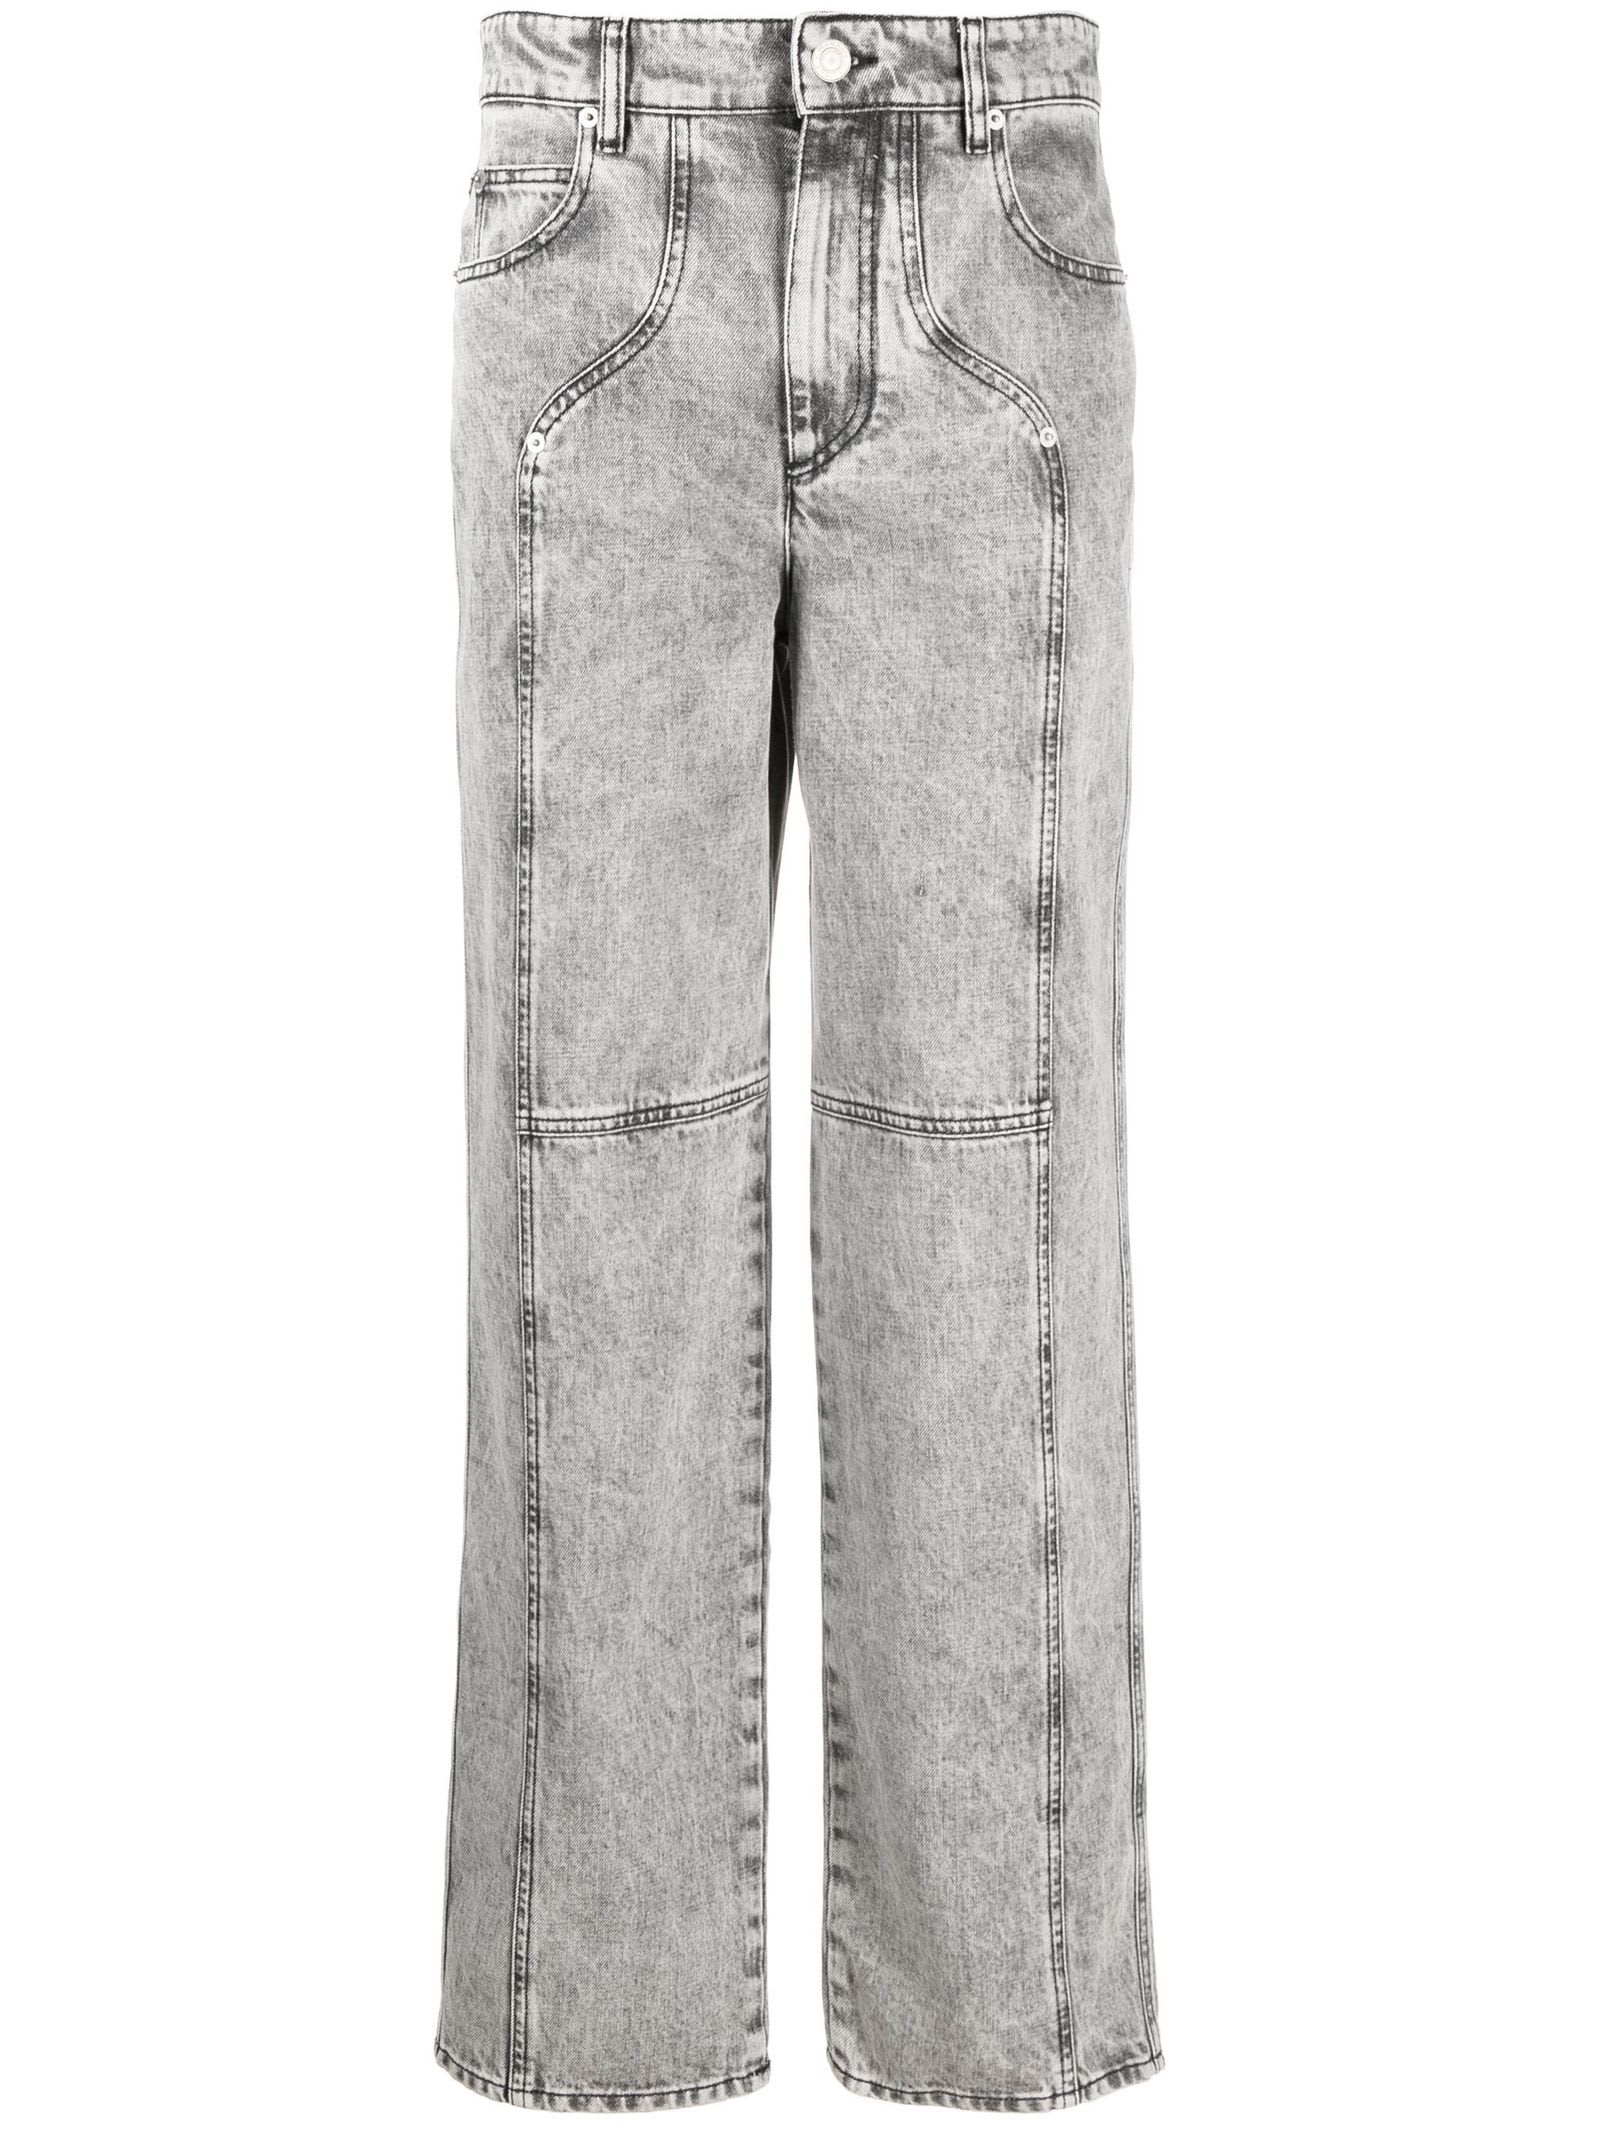 Marant Etoile Light Grey Cotton Denim Jeans In Blue